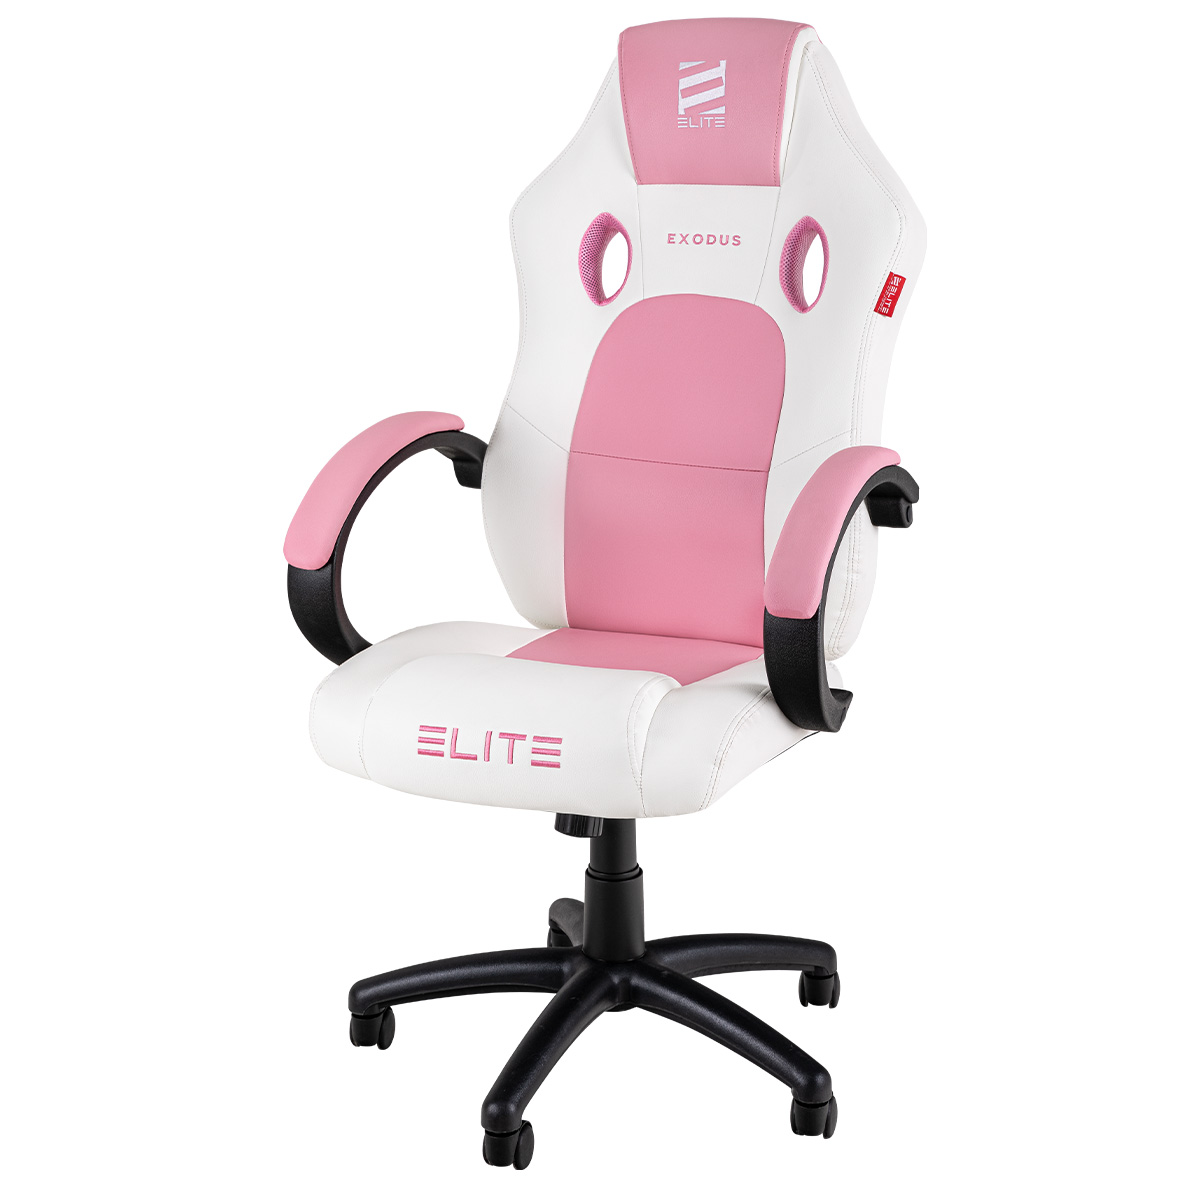 ELITE EXODUS, hohe Weiß/Pink Gaming Rückenlehne, Armpolster, MG100 Stuhl, extra Memory-Schaum, Wippmechanik